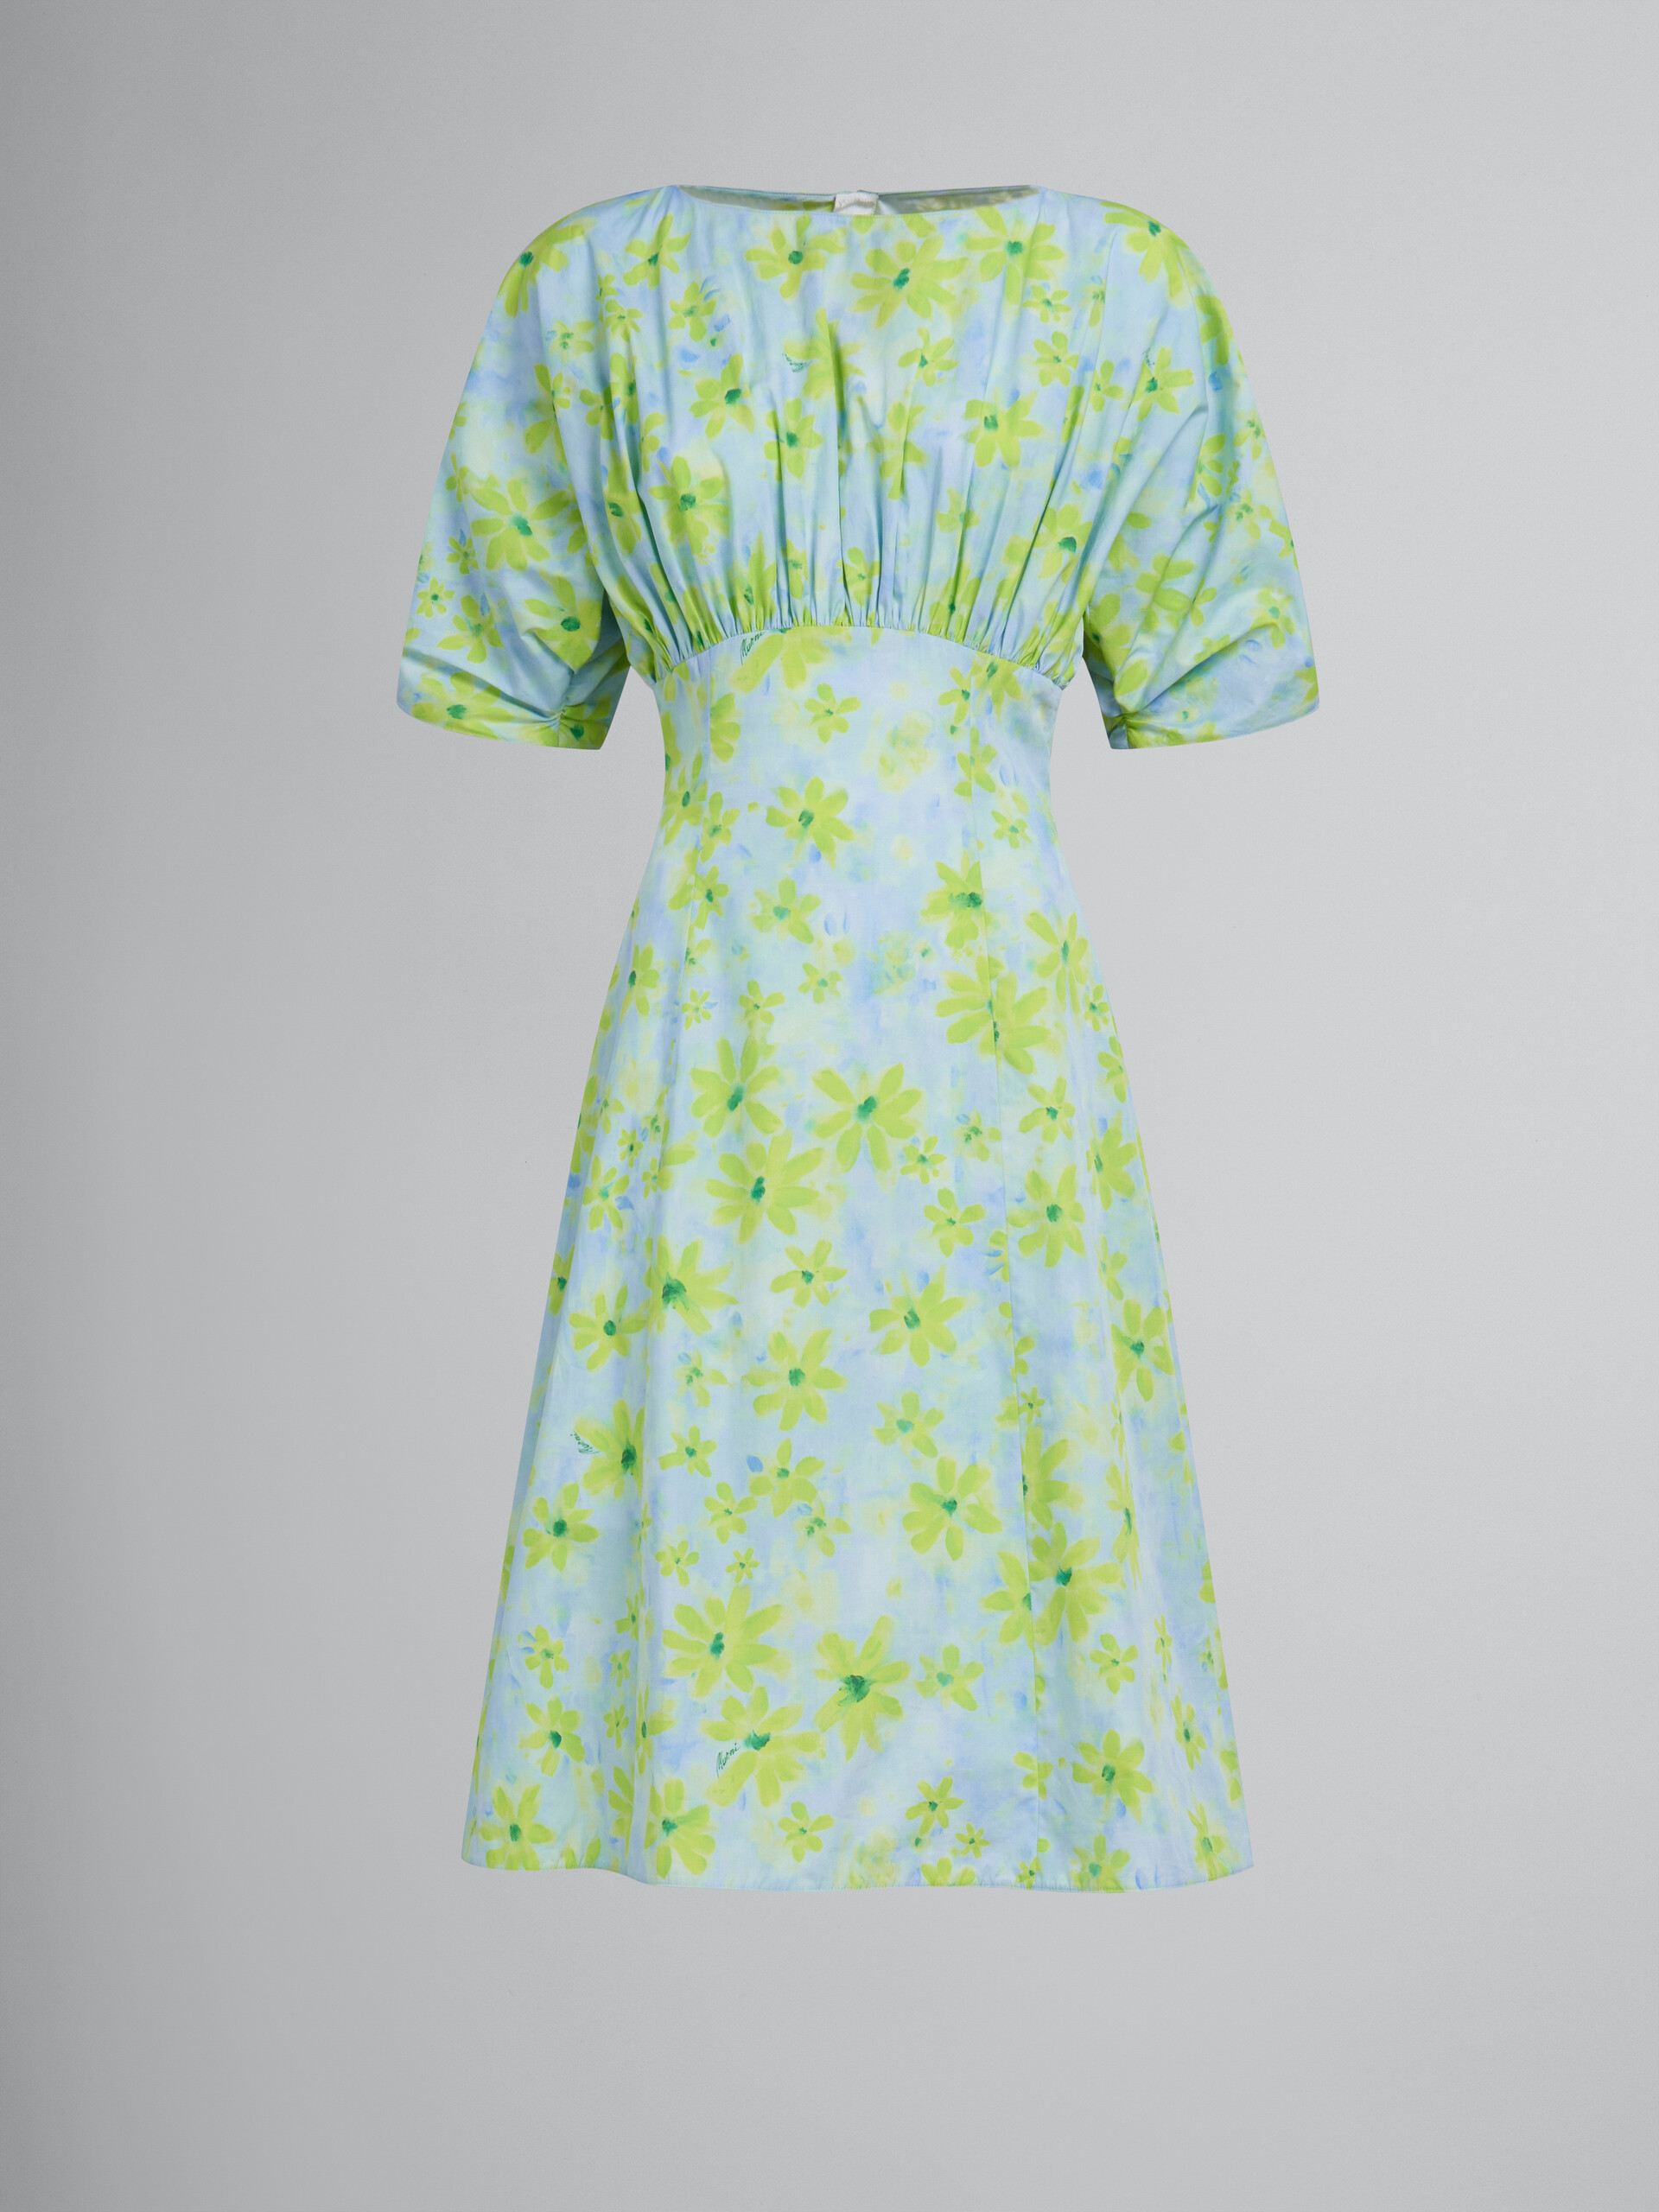 Light green poplin gathered dress with Parade print - Dresses - Image 1